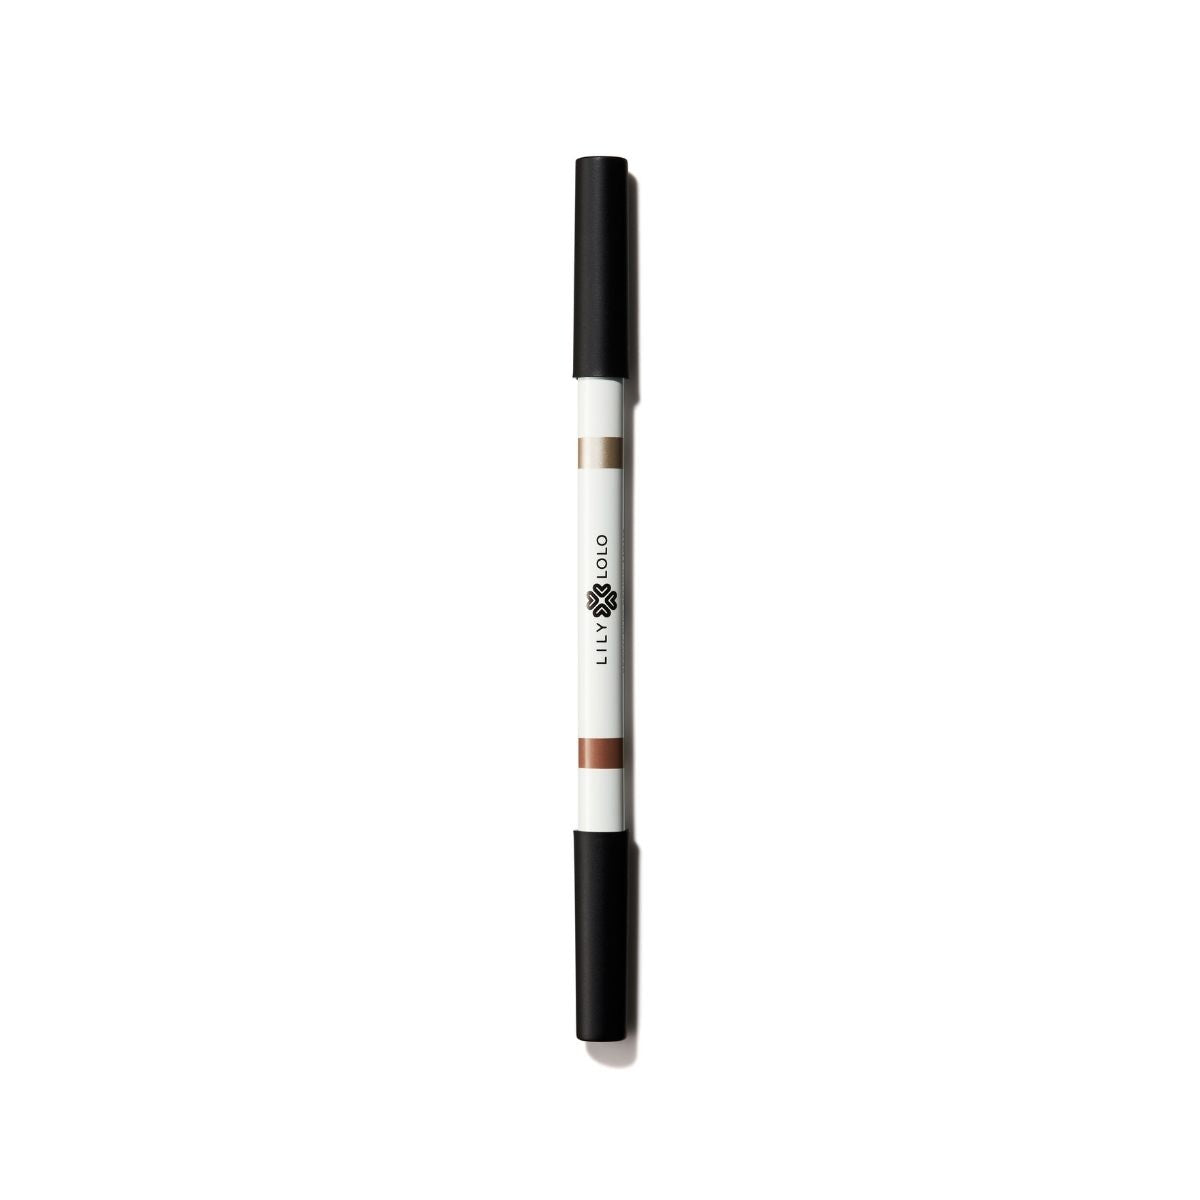 2-in-1 Brow Duo Pencil, Cosmetics companies